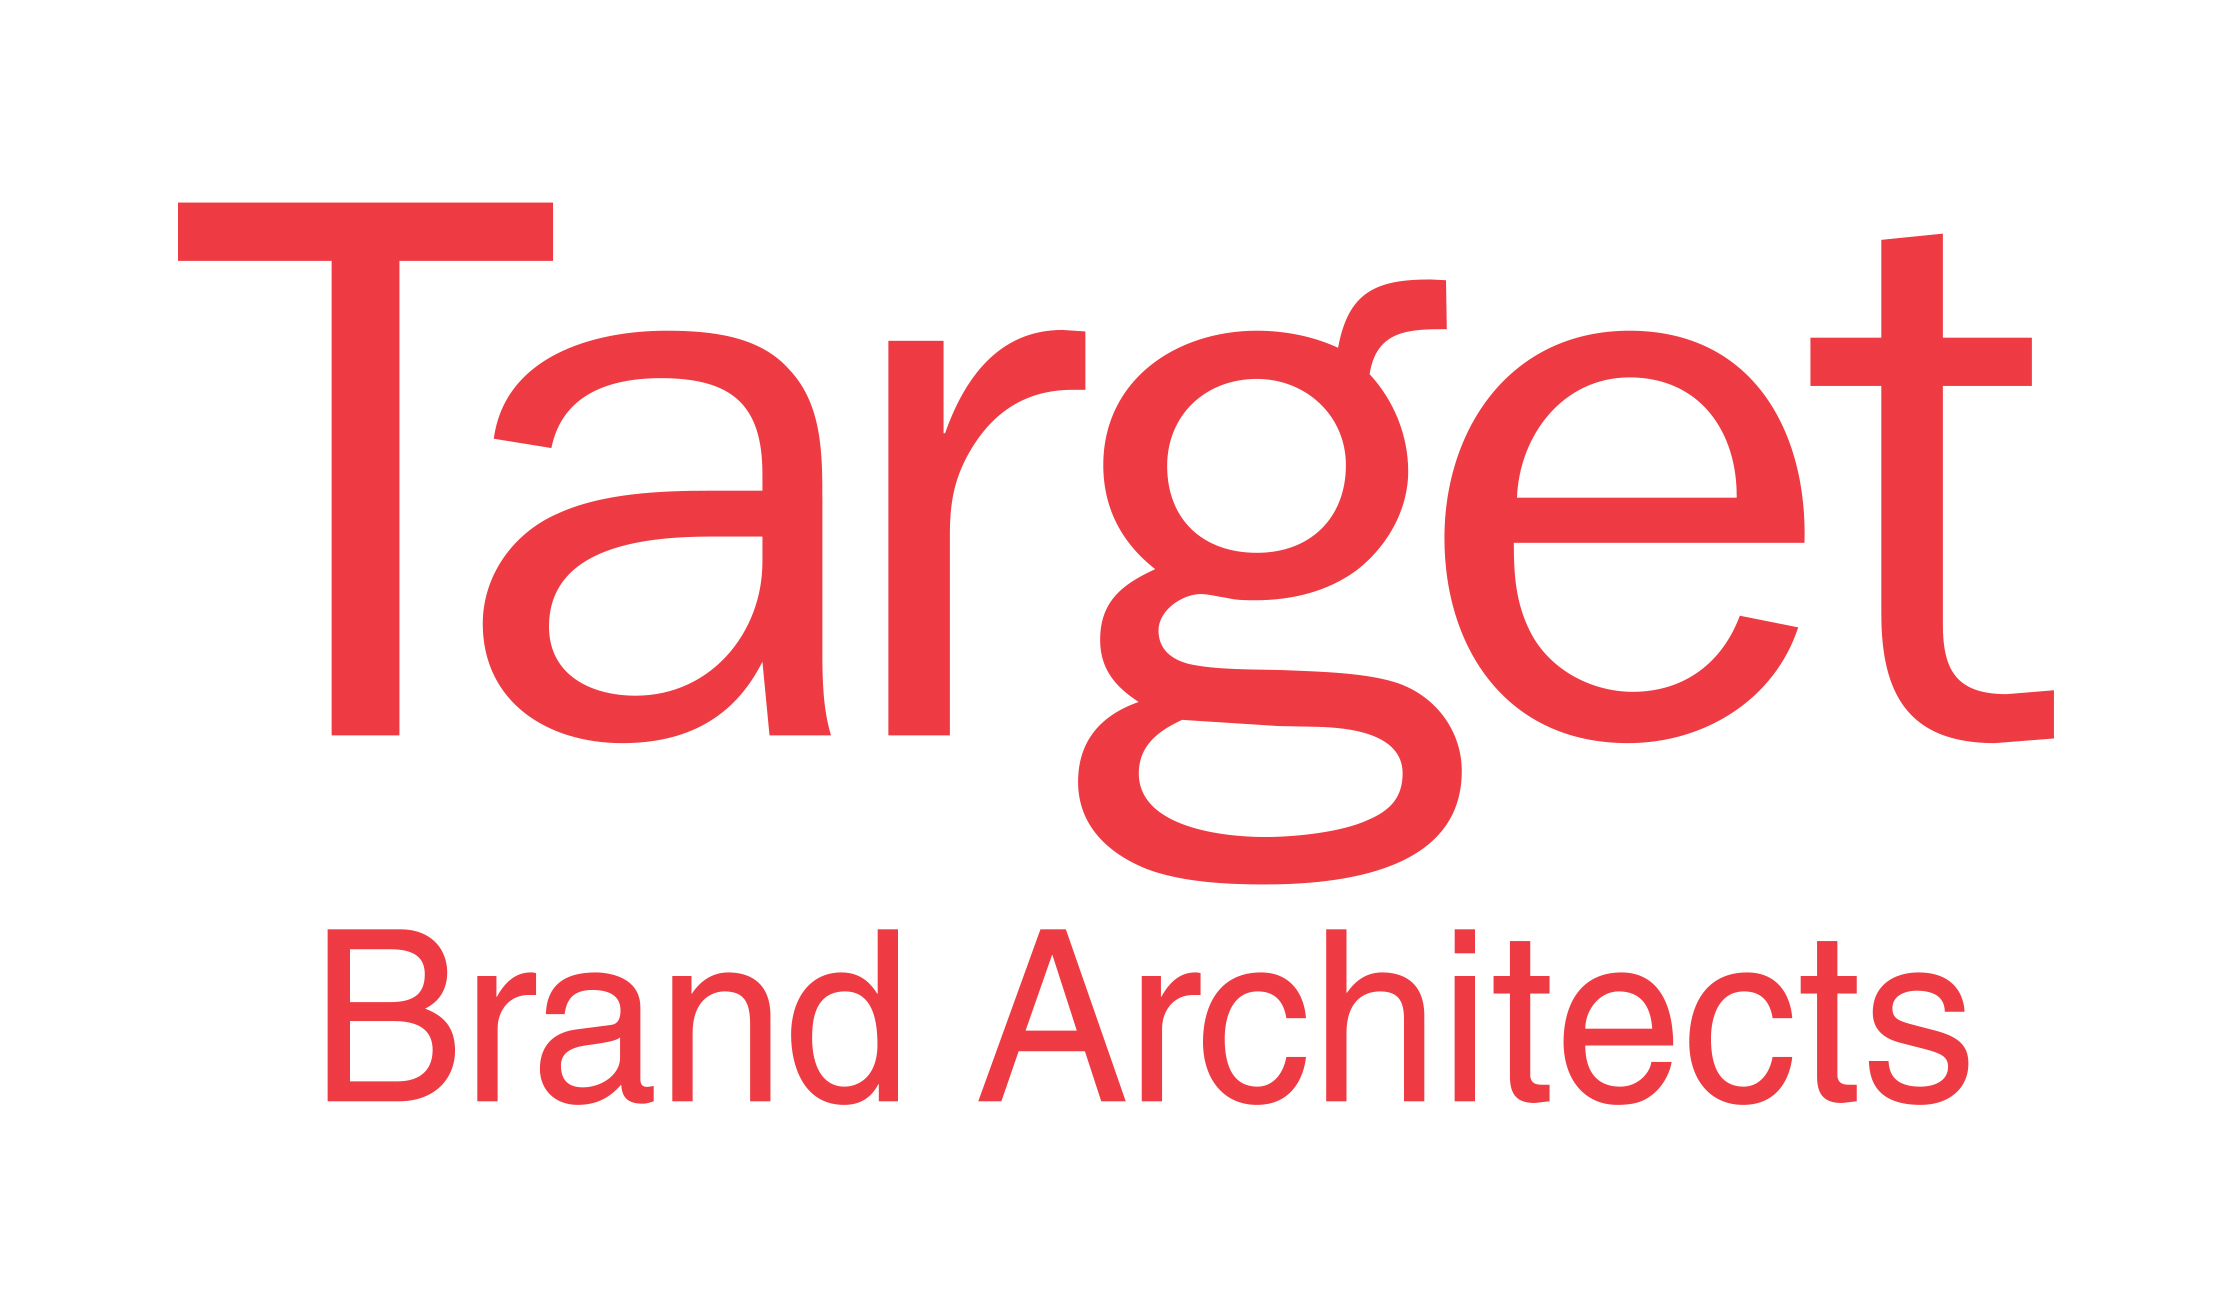 Target Brand Architects